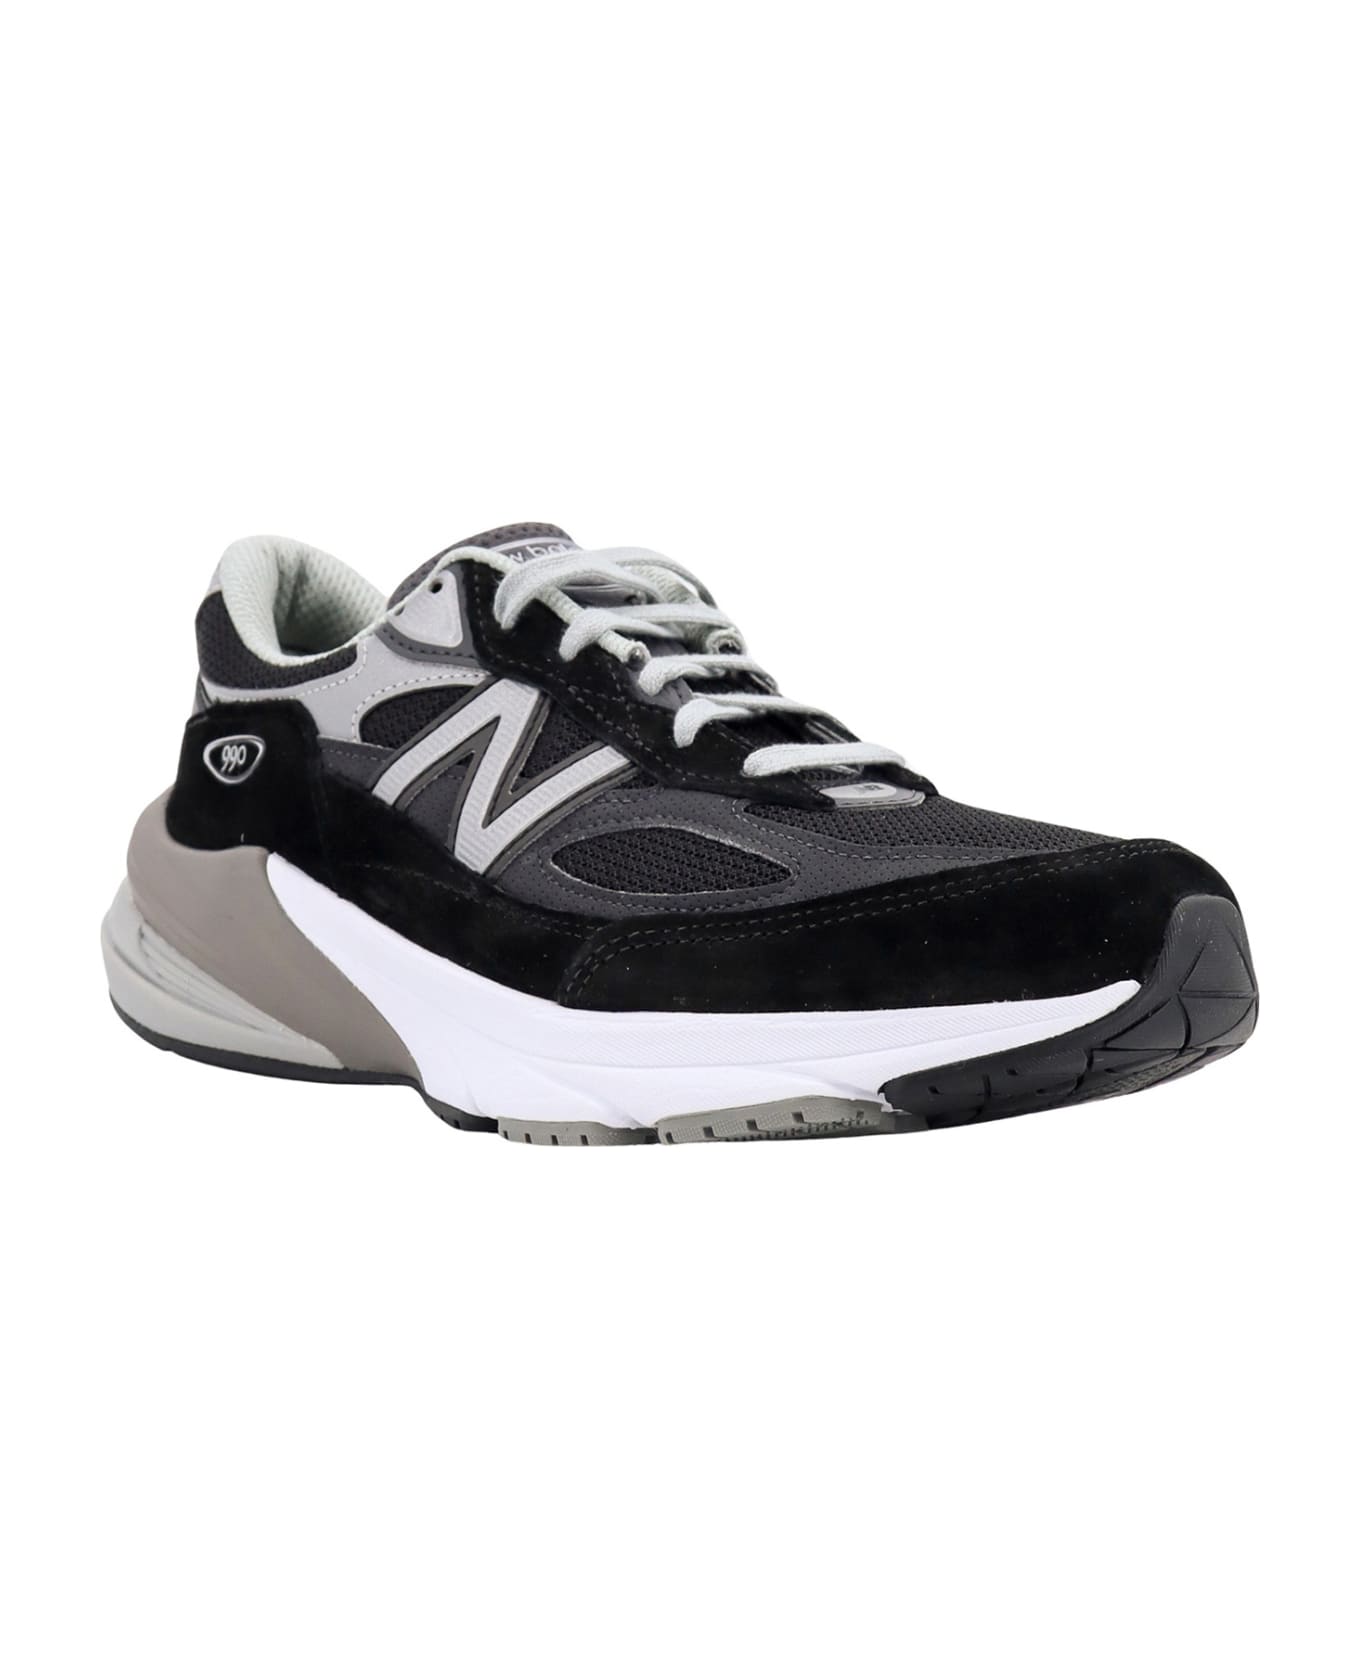 New Balance 990 Sneakers - Black